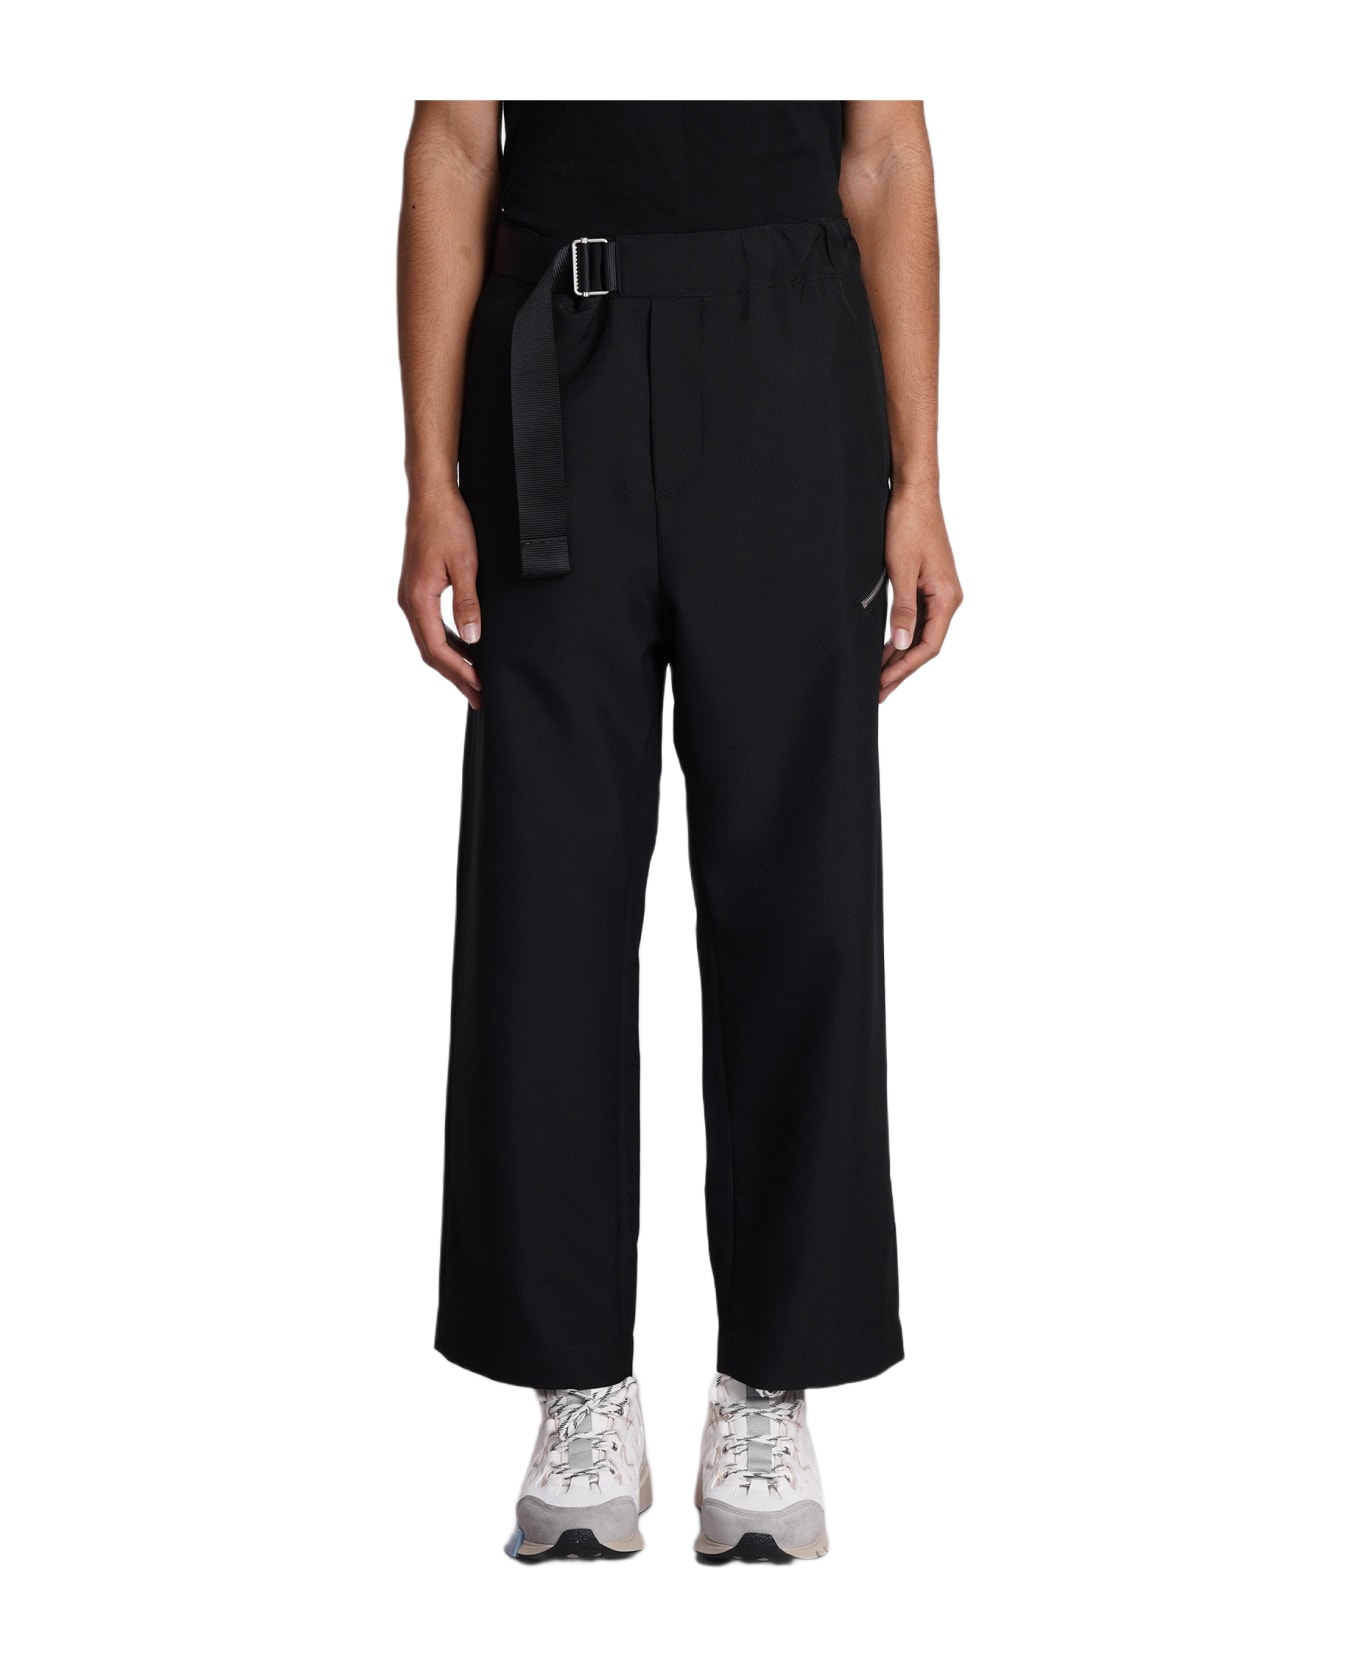 OAMC Pants In Black Polyester - Black